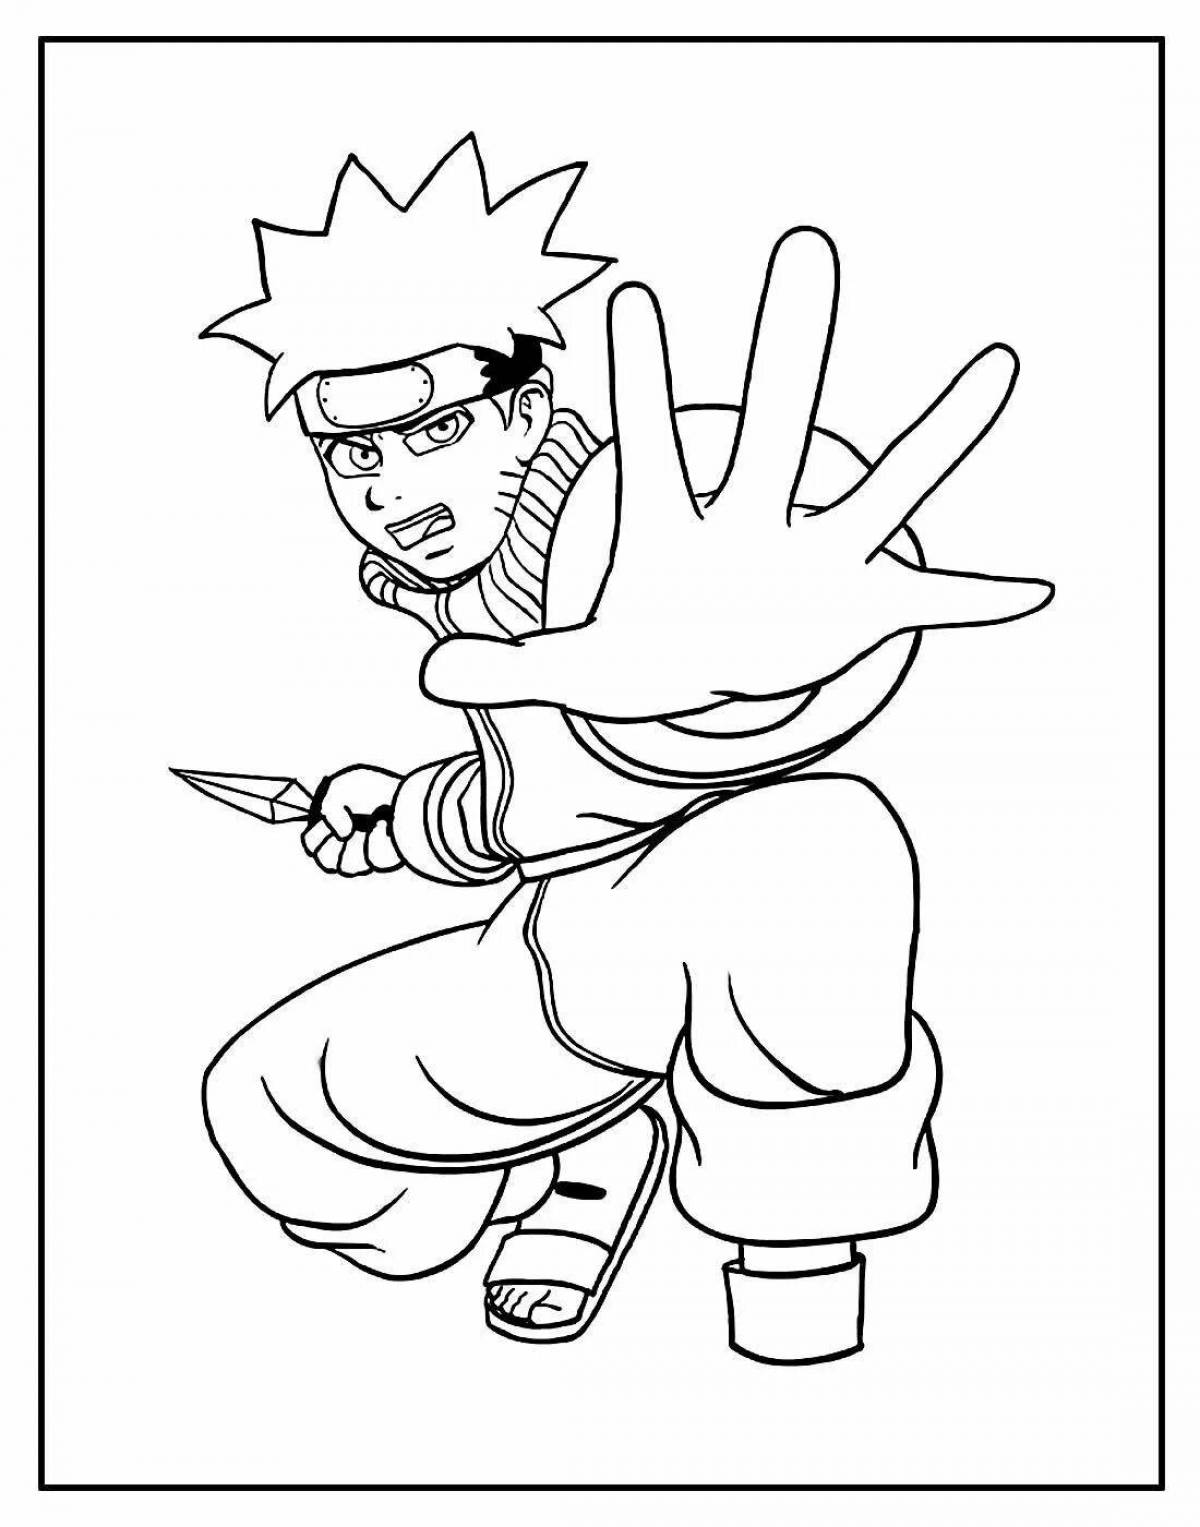 Naruto mystic seal coloring page